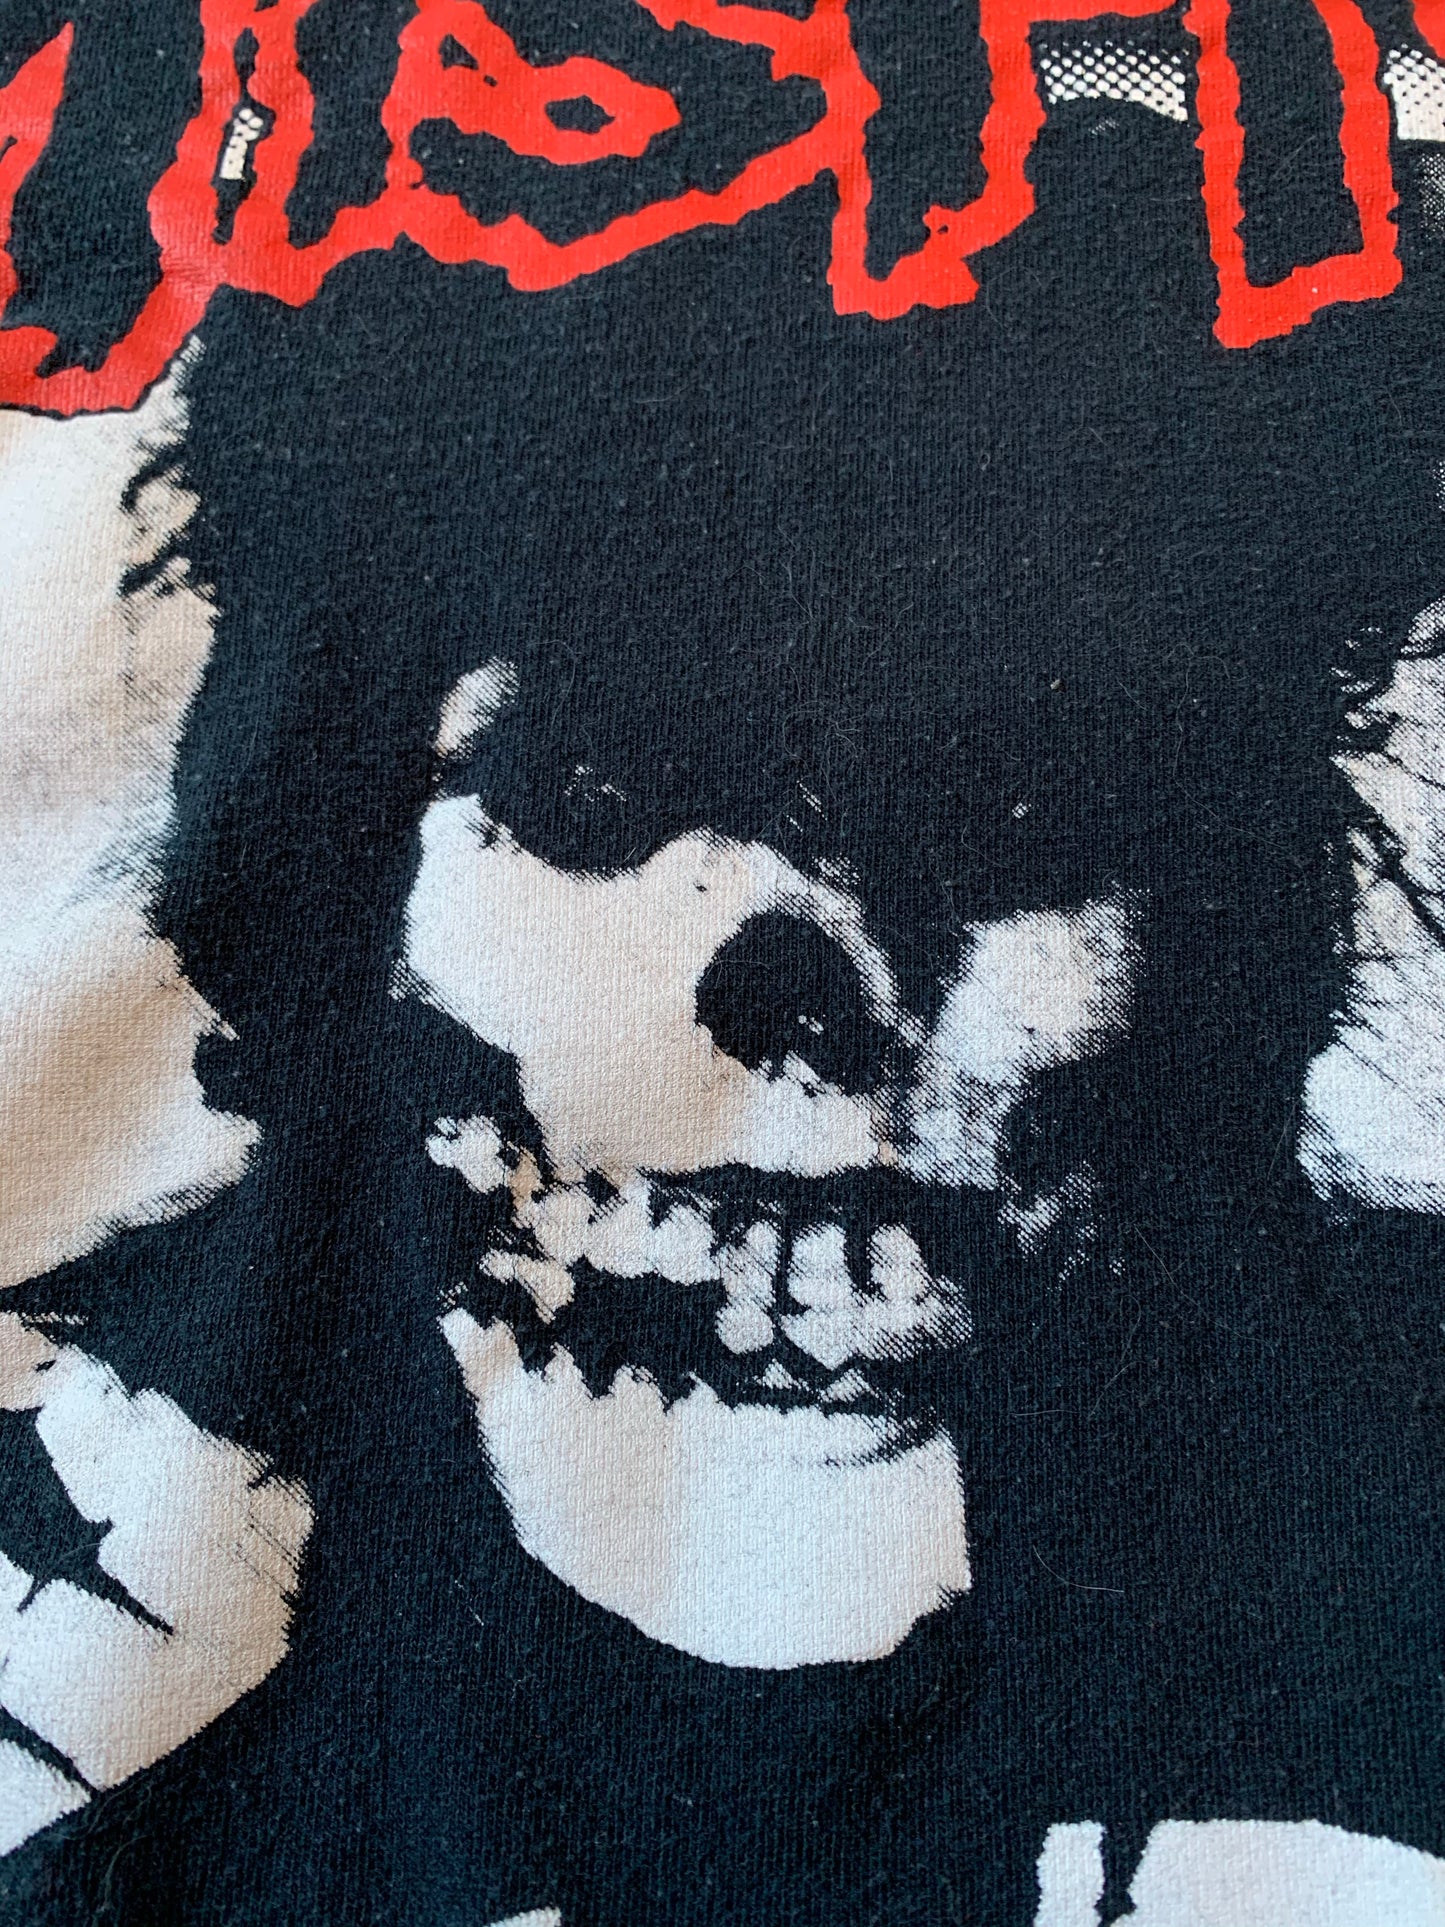 2006 Misfits Danzig Crimson Skull T-Shirt